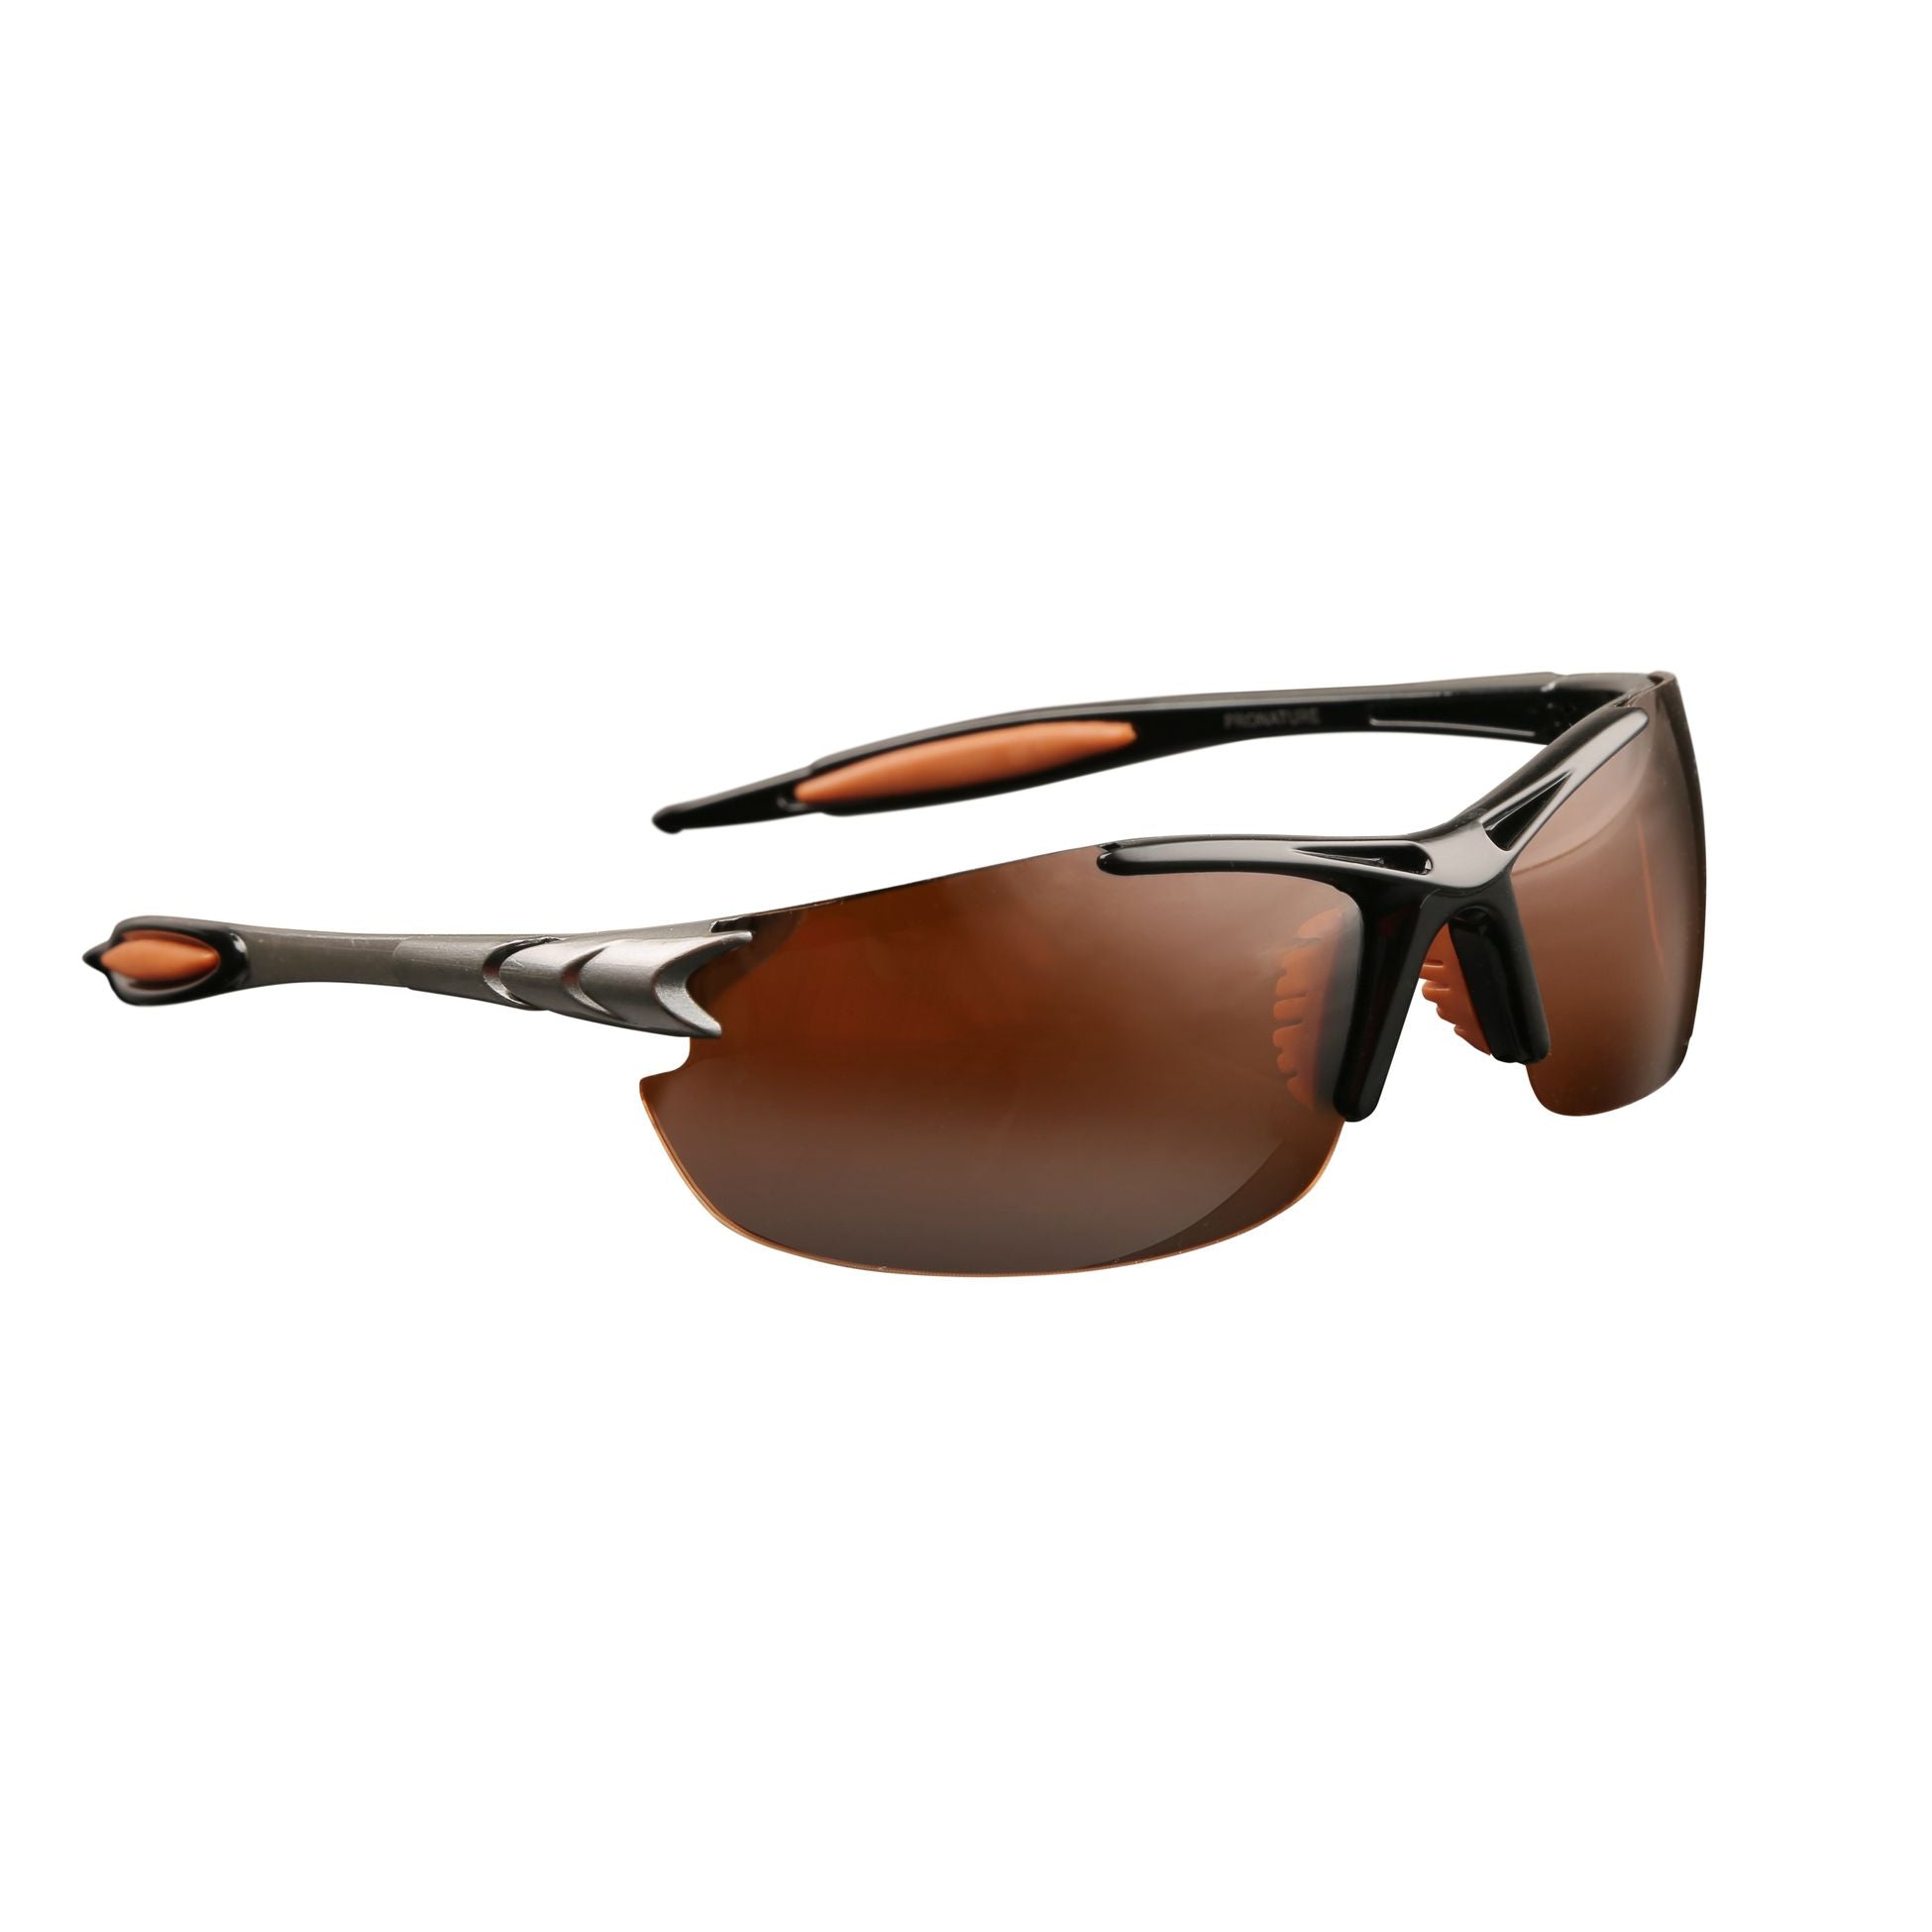 "Belvu" polarized sunglasses